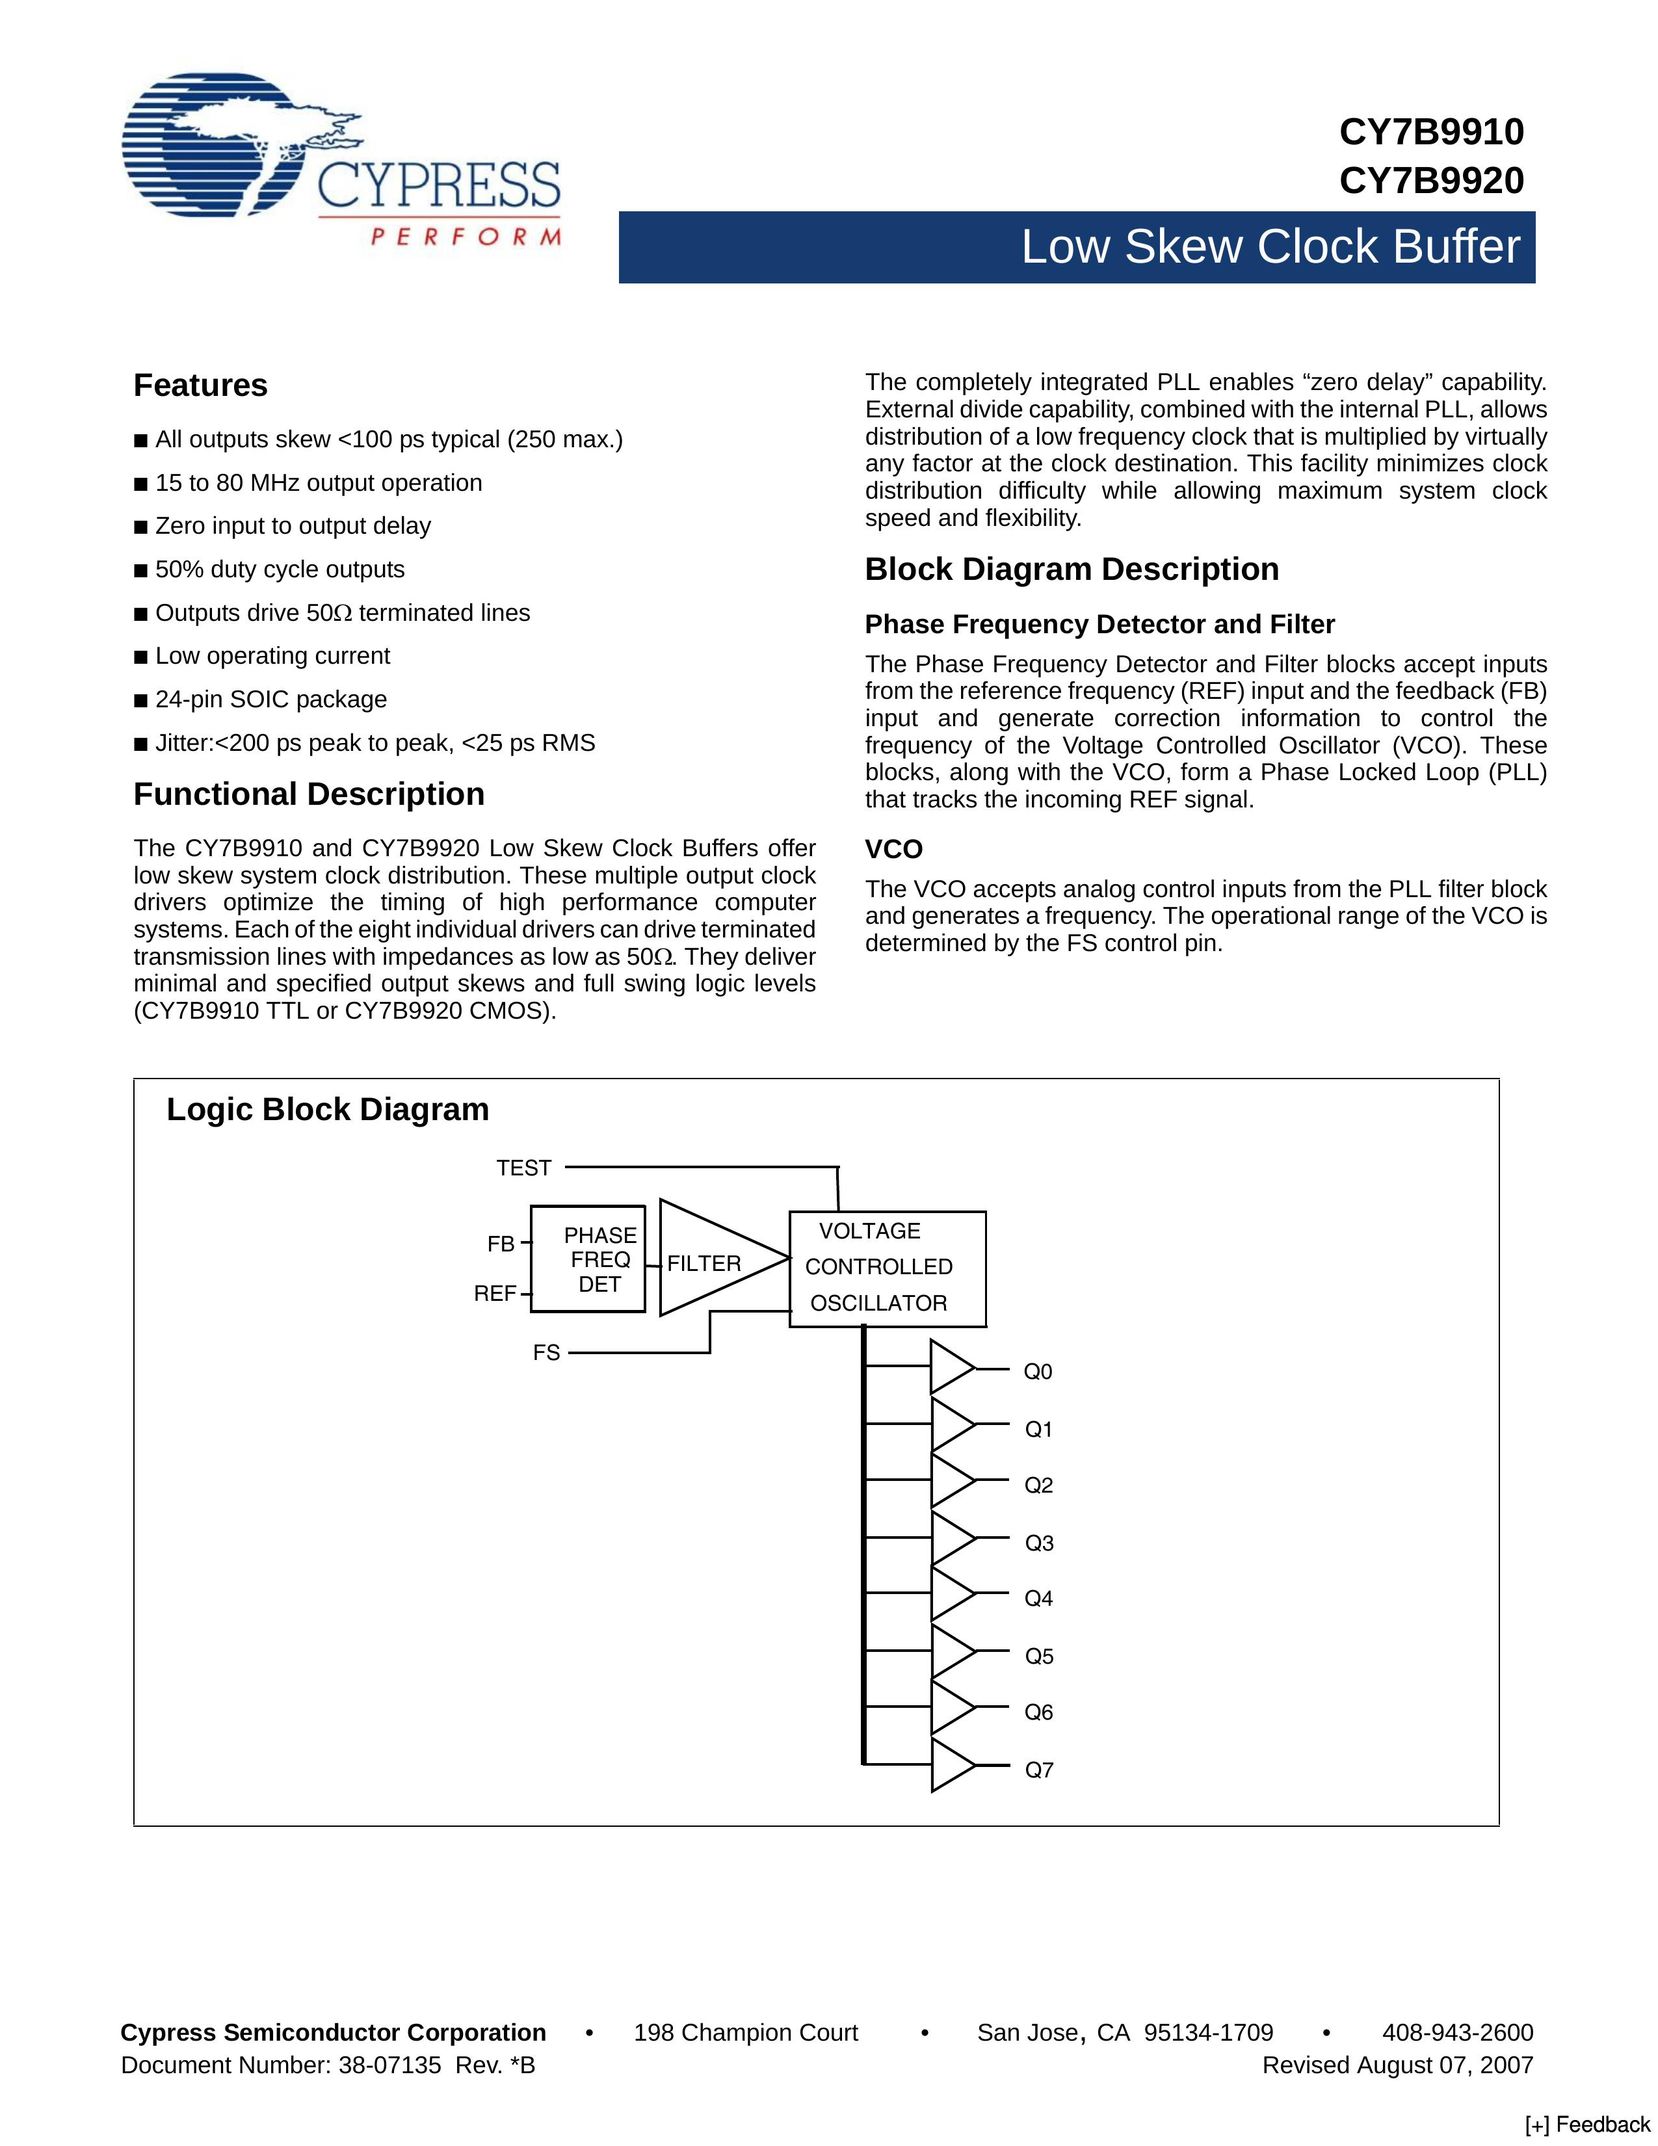 Cypress CY7B9920 Clock User Manual